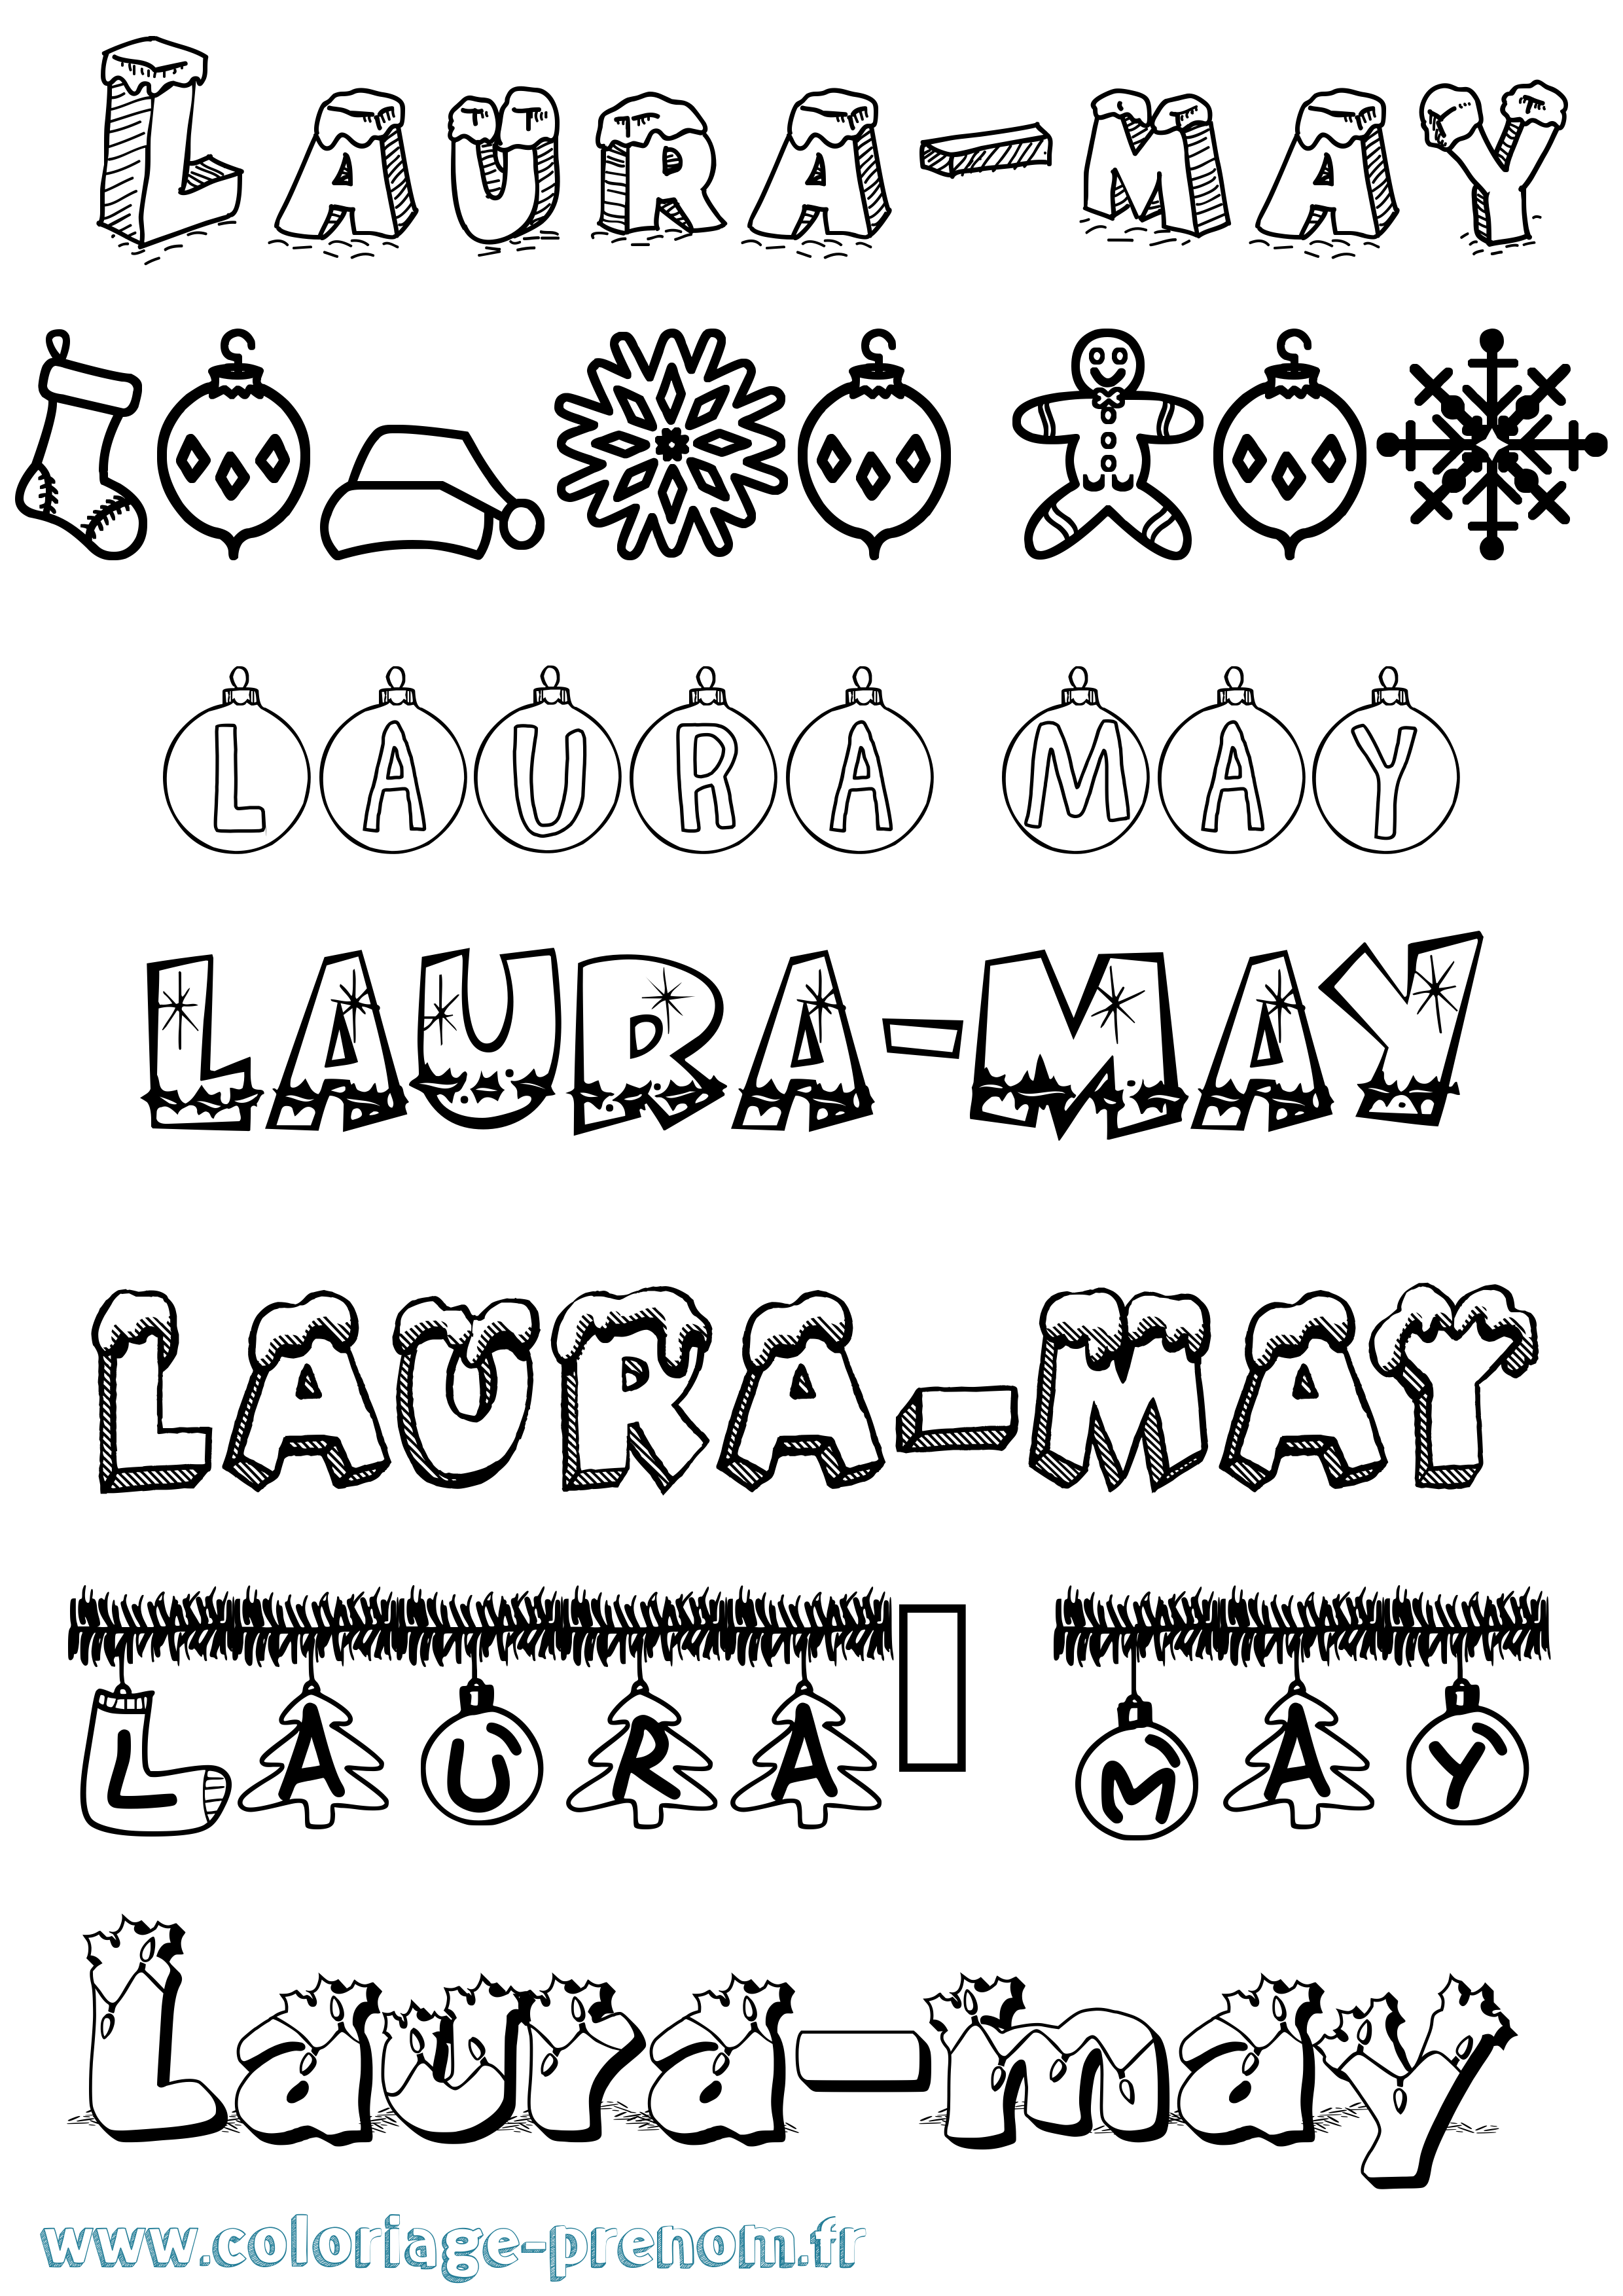 Coloriage prénom Laura-May Noël